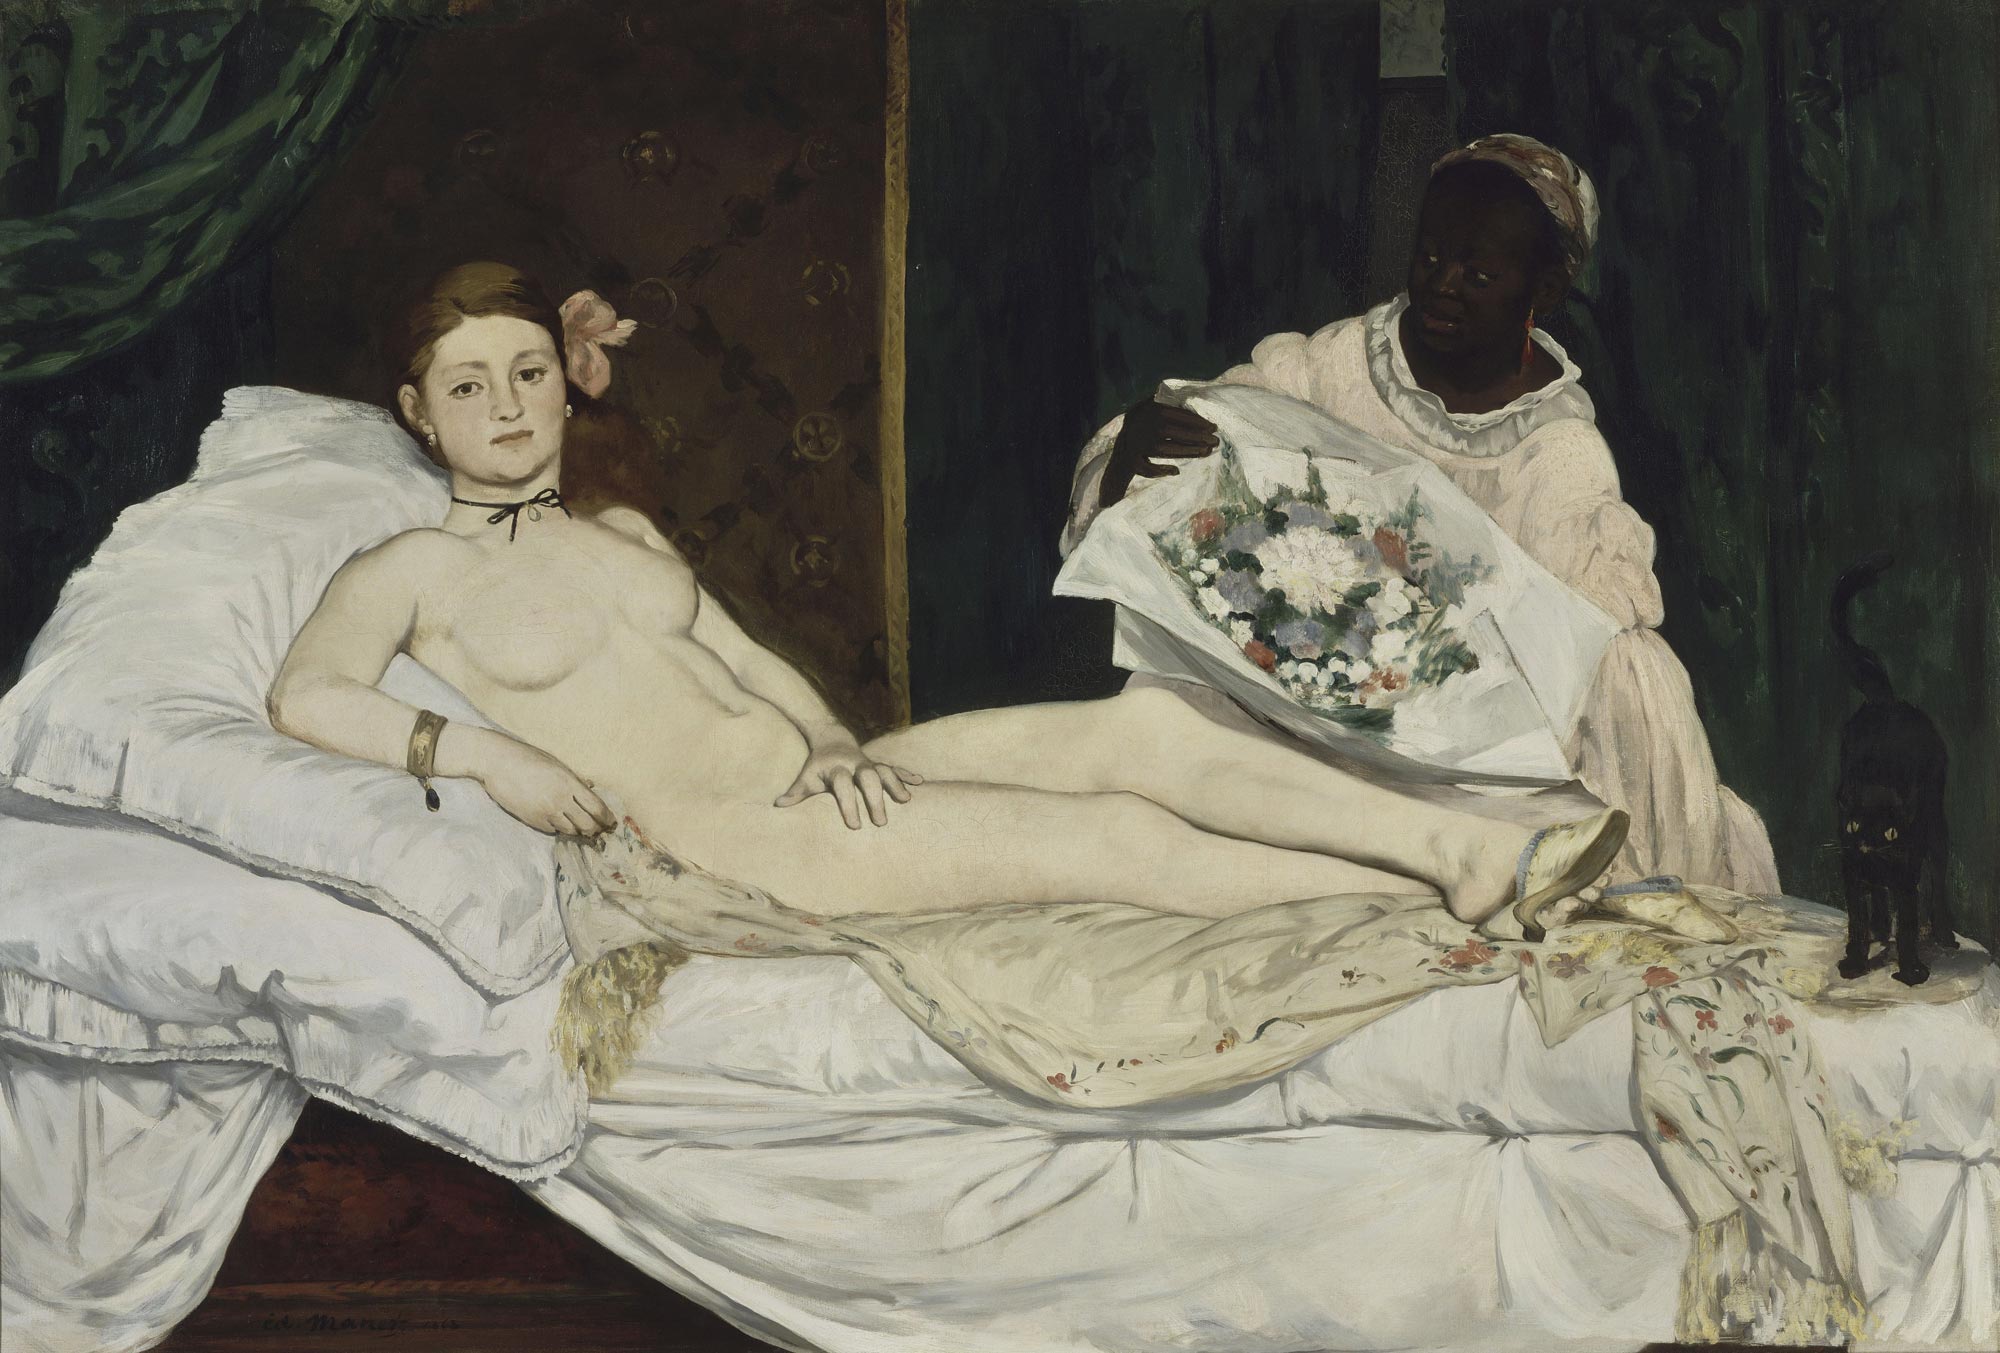 Édouard Manet, Olympia (1863-65; olio su tela, 130,5 x 190 cm; Parigi, Musée d’Orsay)